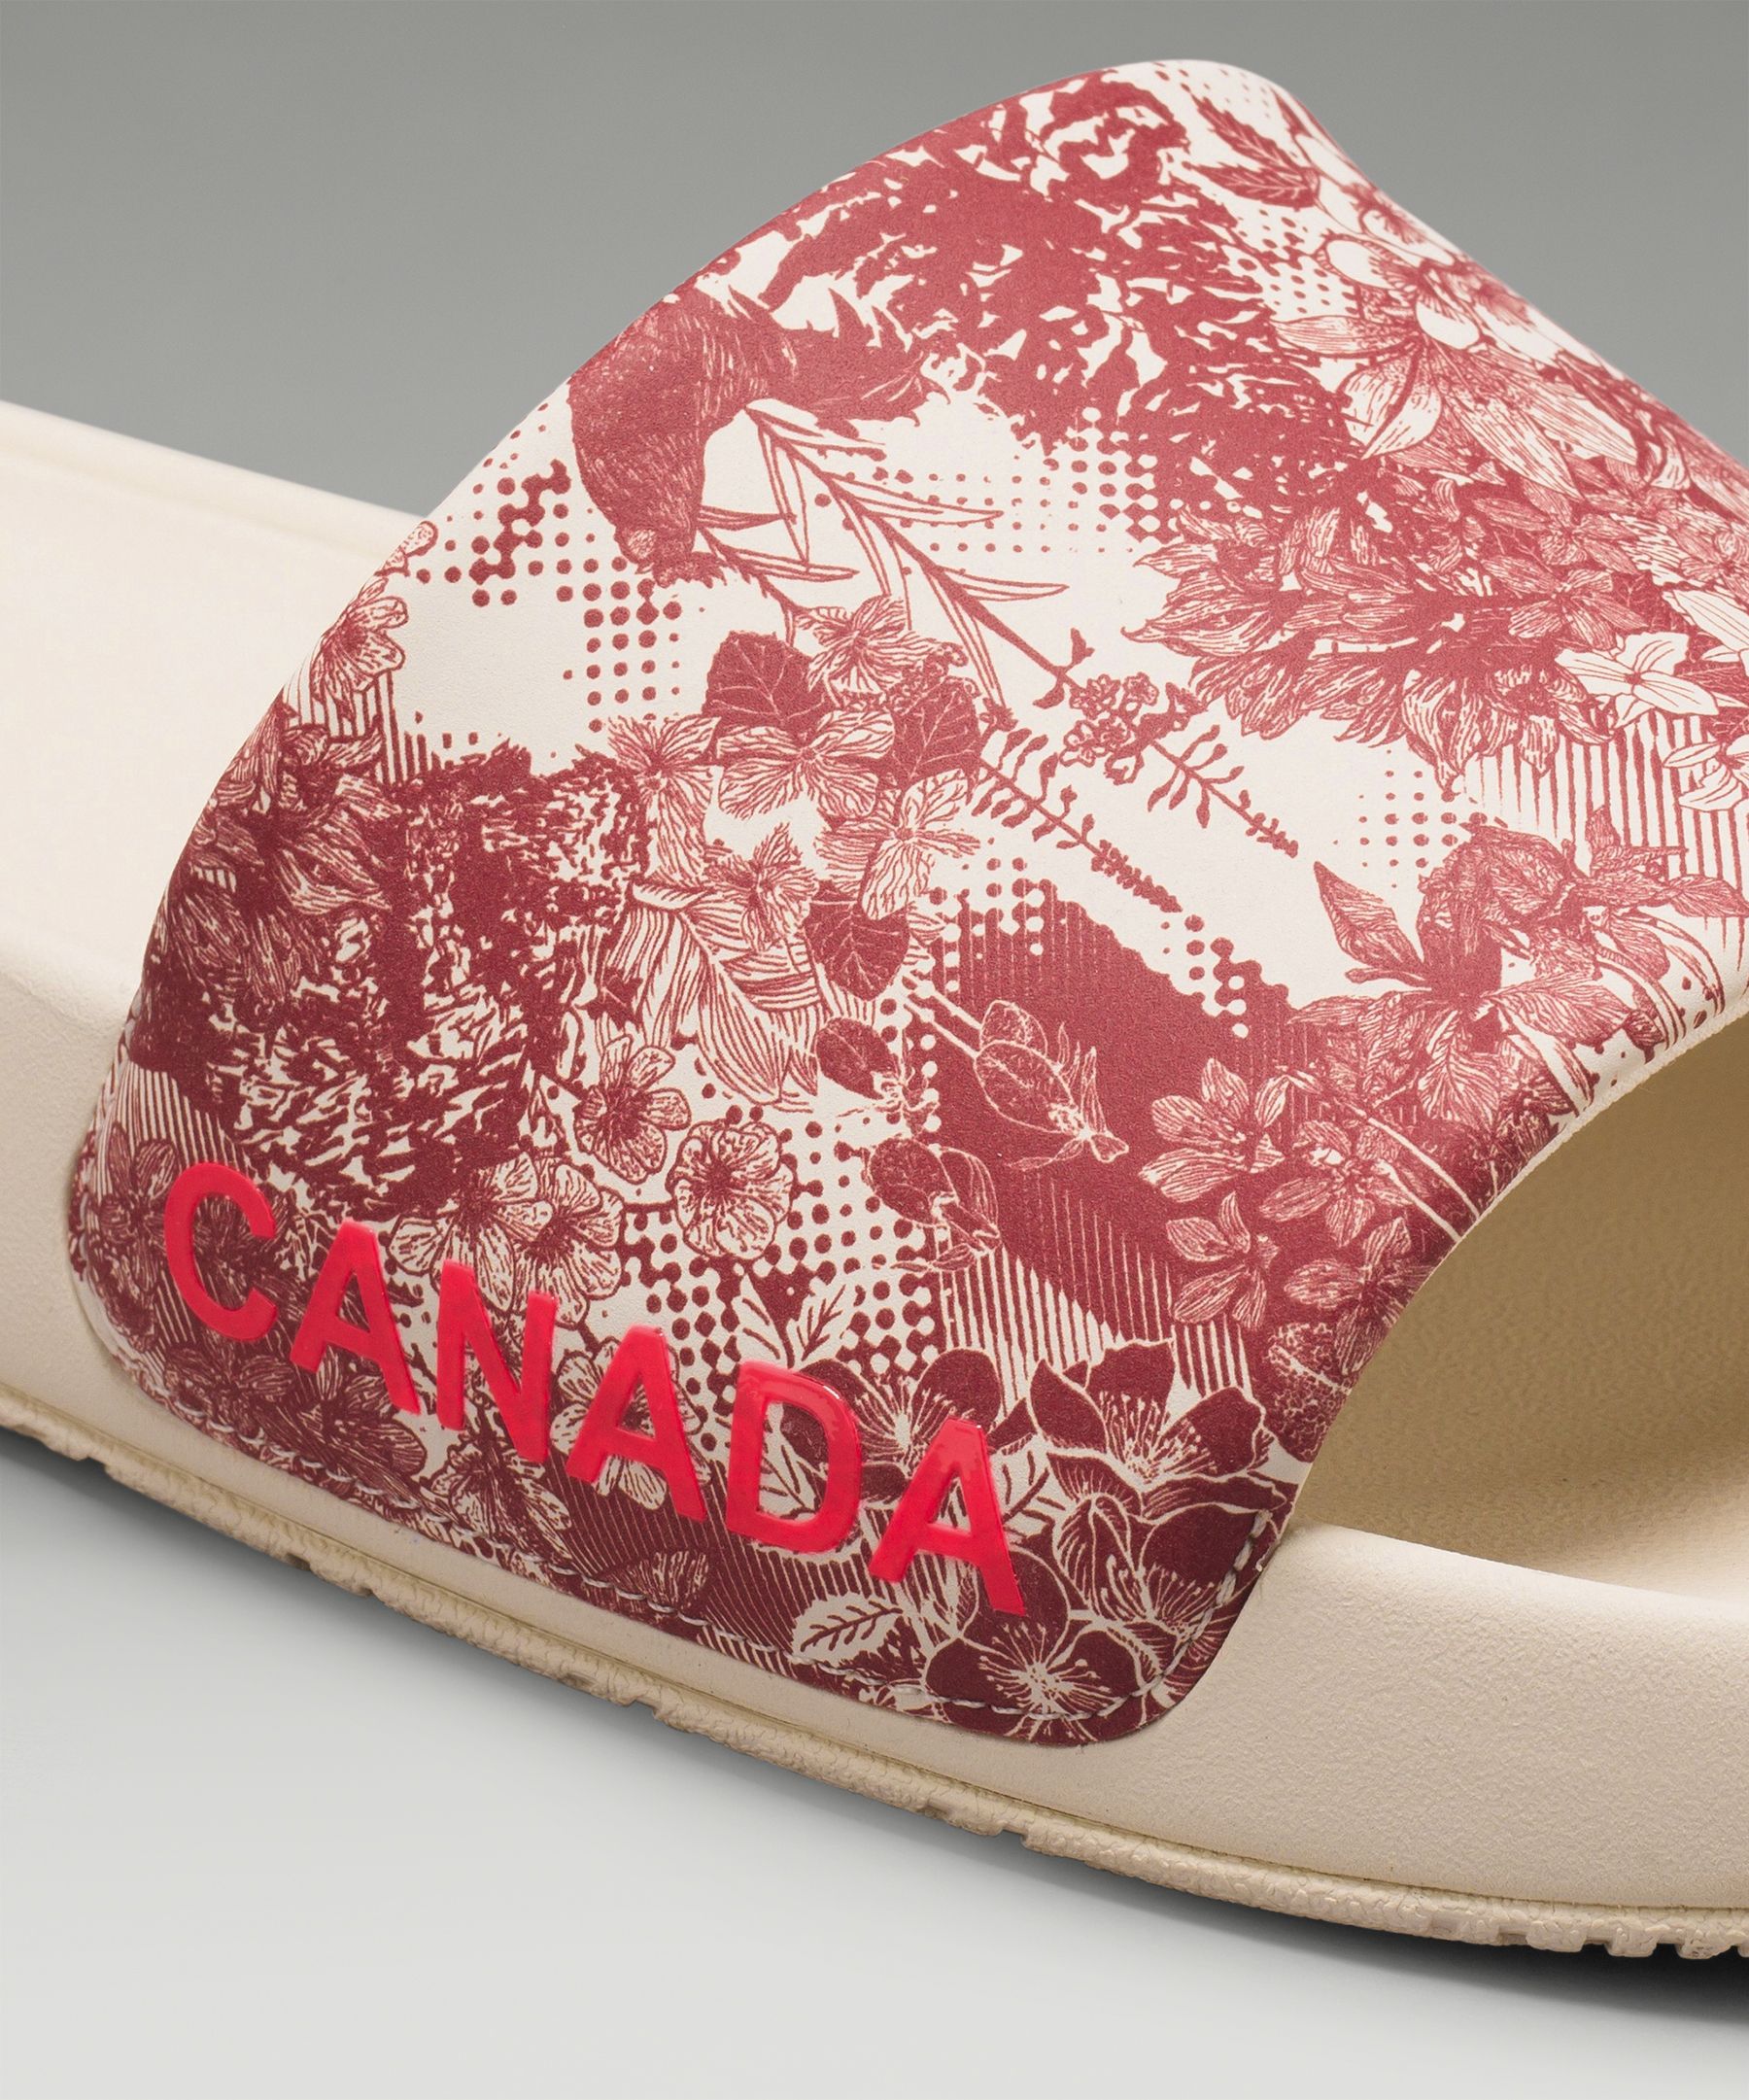 Team Canada Restfeel Men's Slide | Sandals